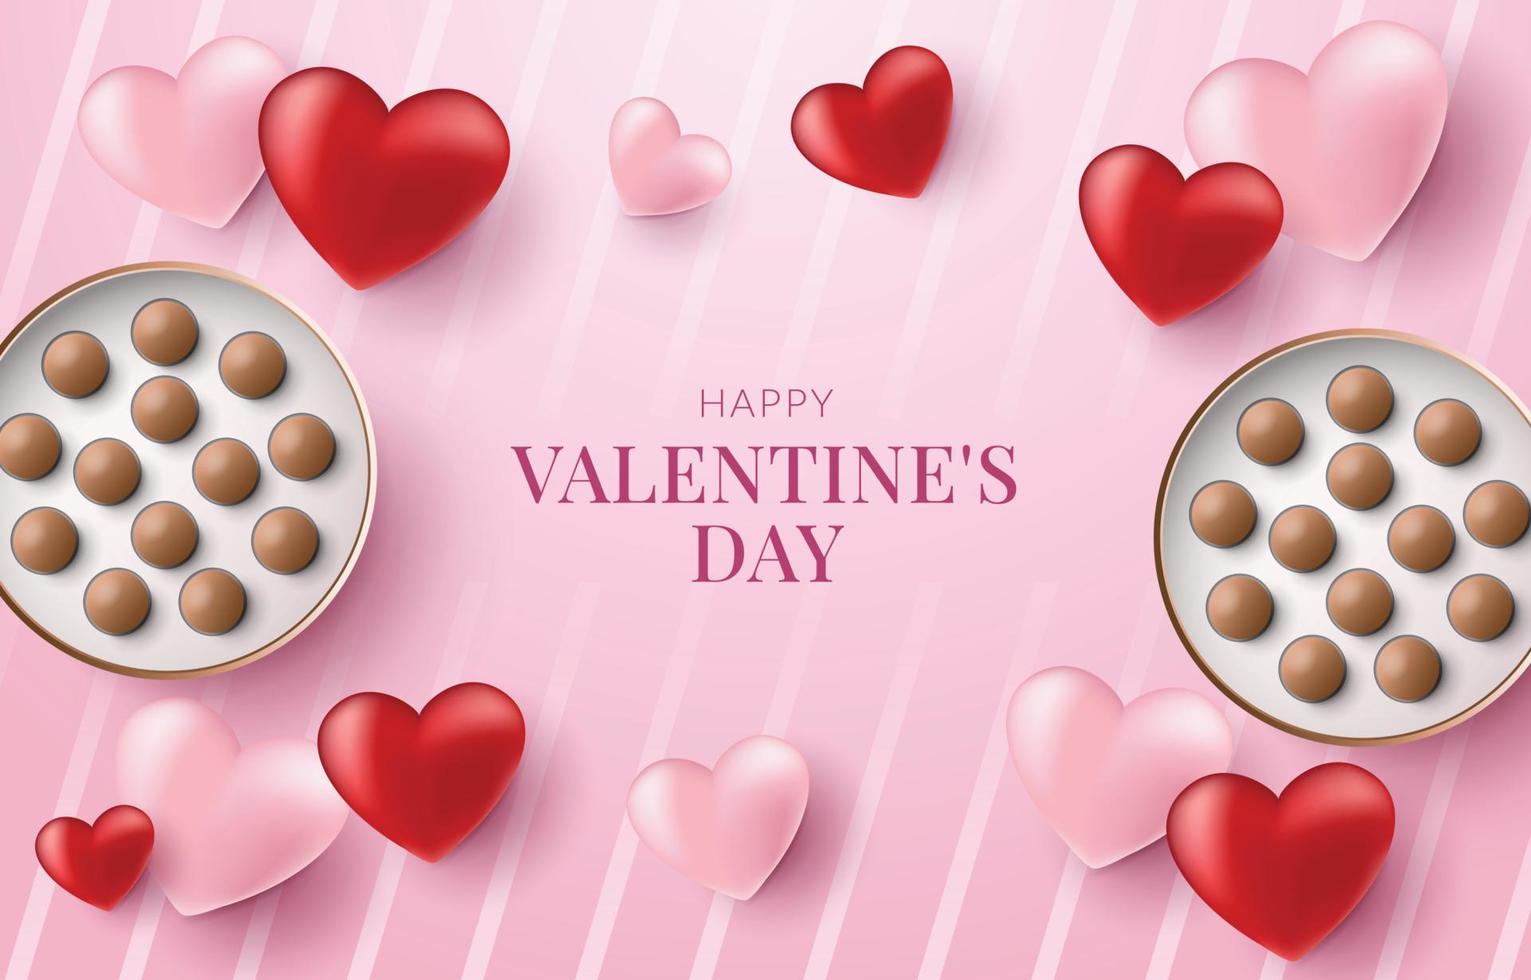 Happy Valentines Day Background vector